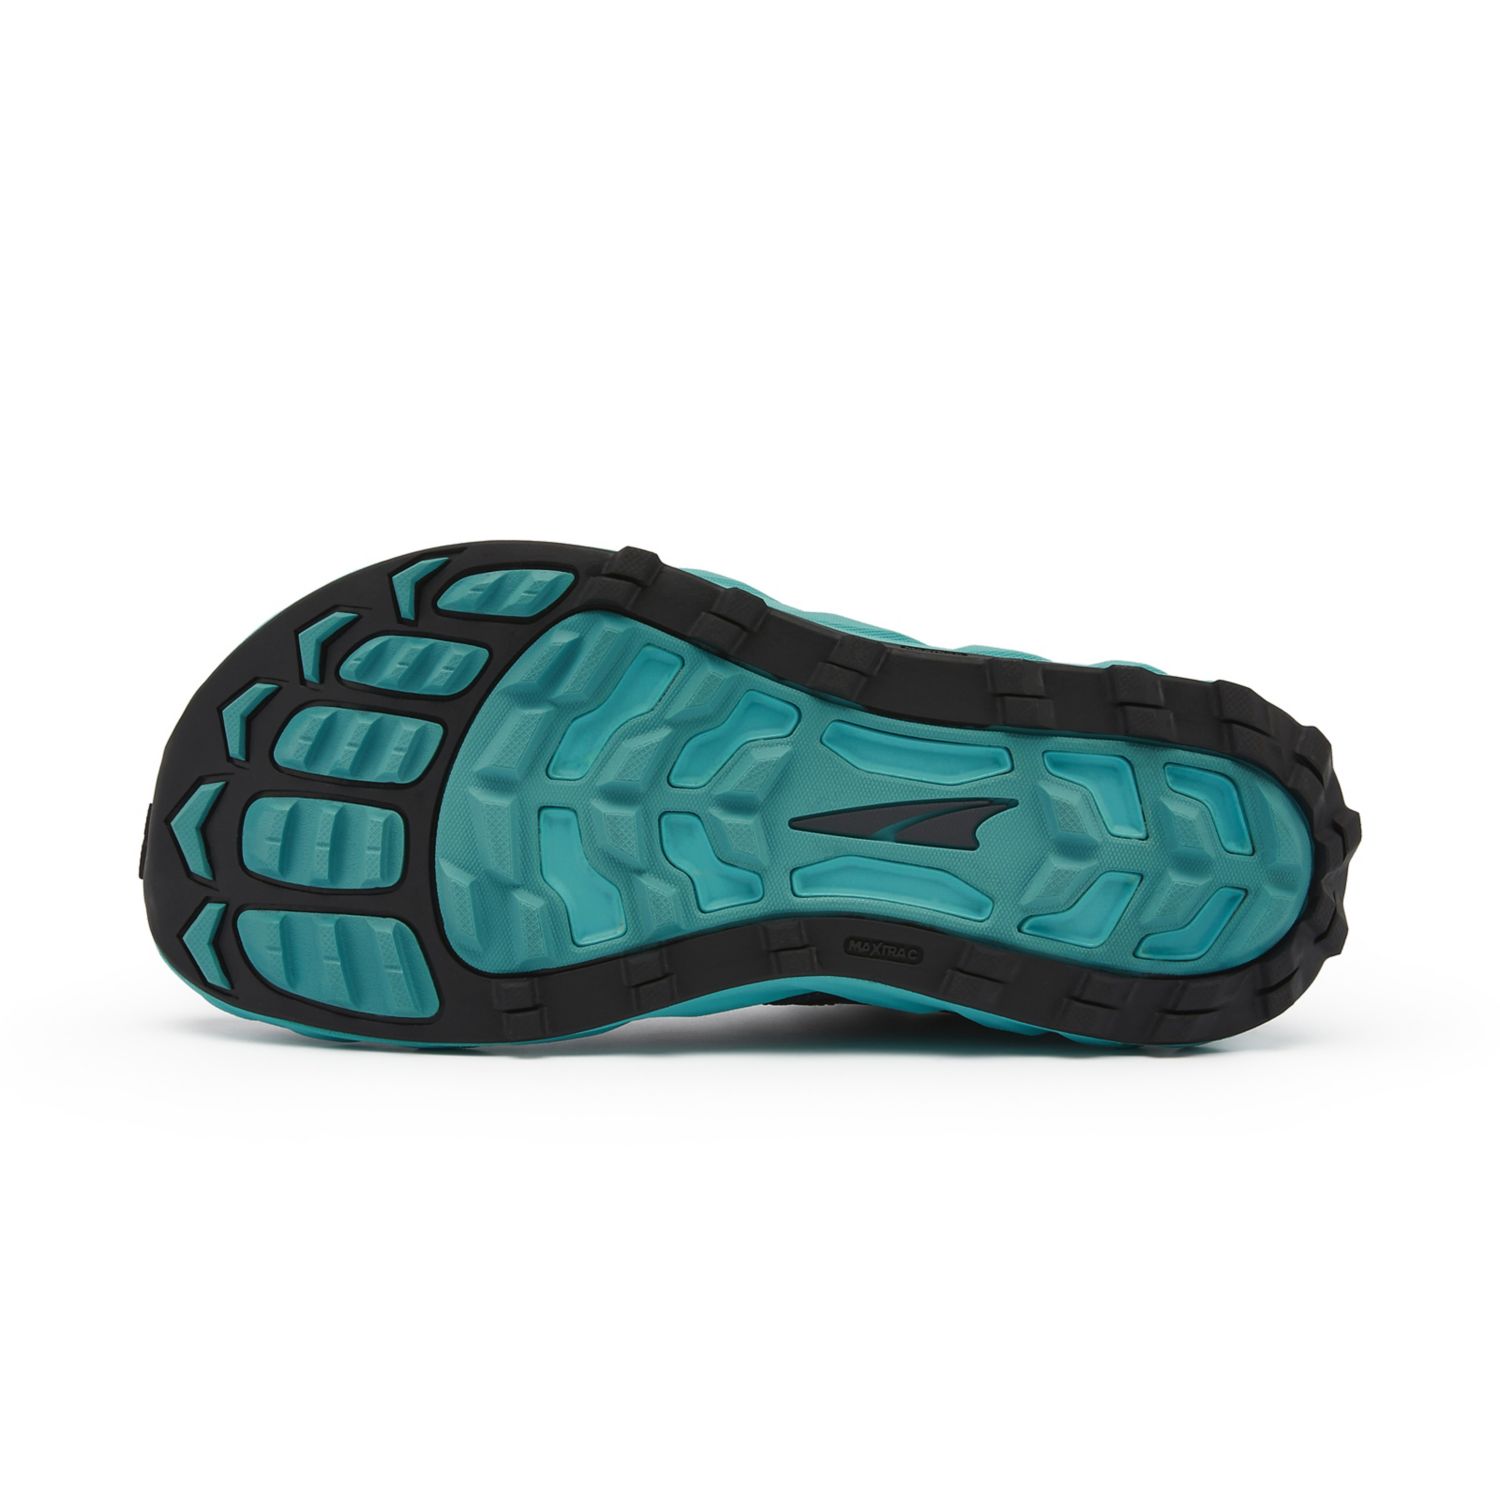 Black Altra Superior 5 Women's Trail Running Shoes | Ireland-60934289